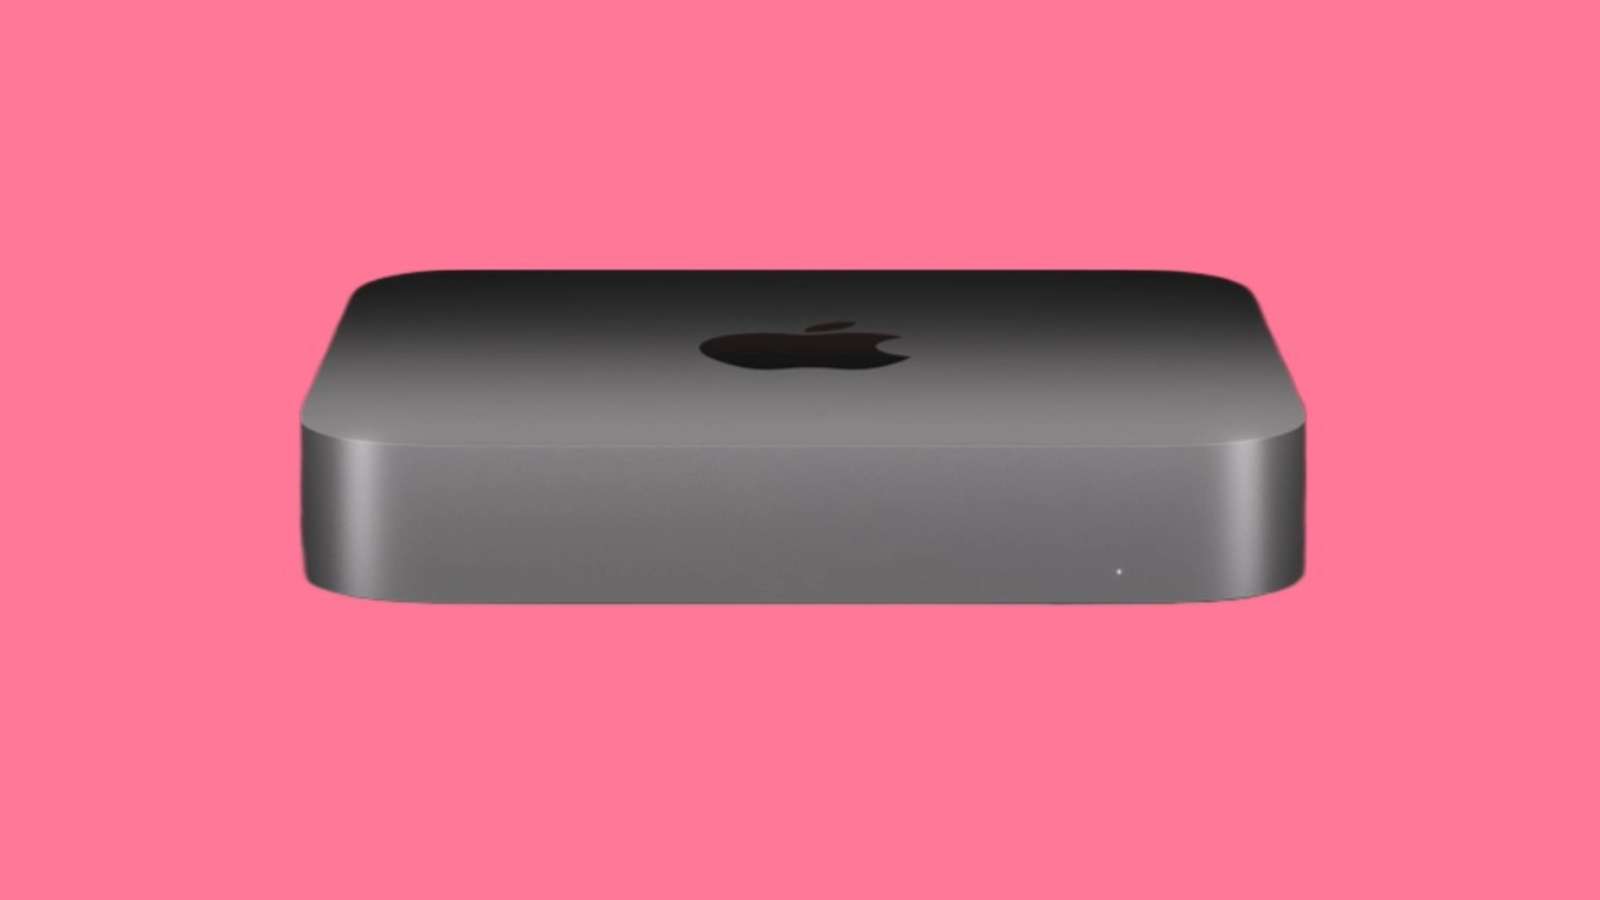 M1 Mac Mini on a pink background